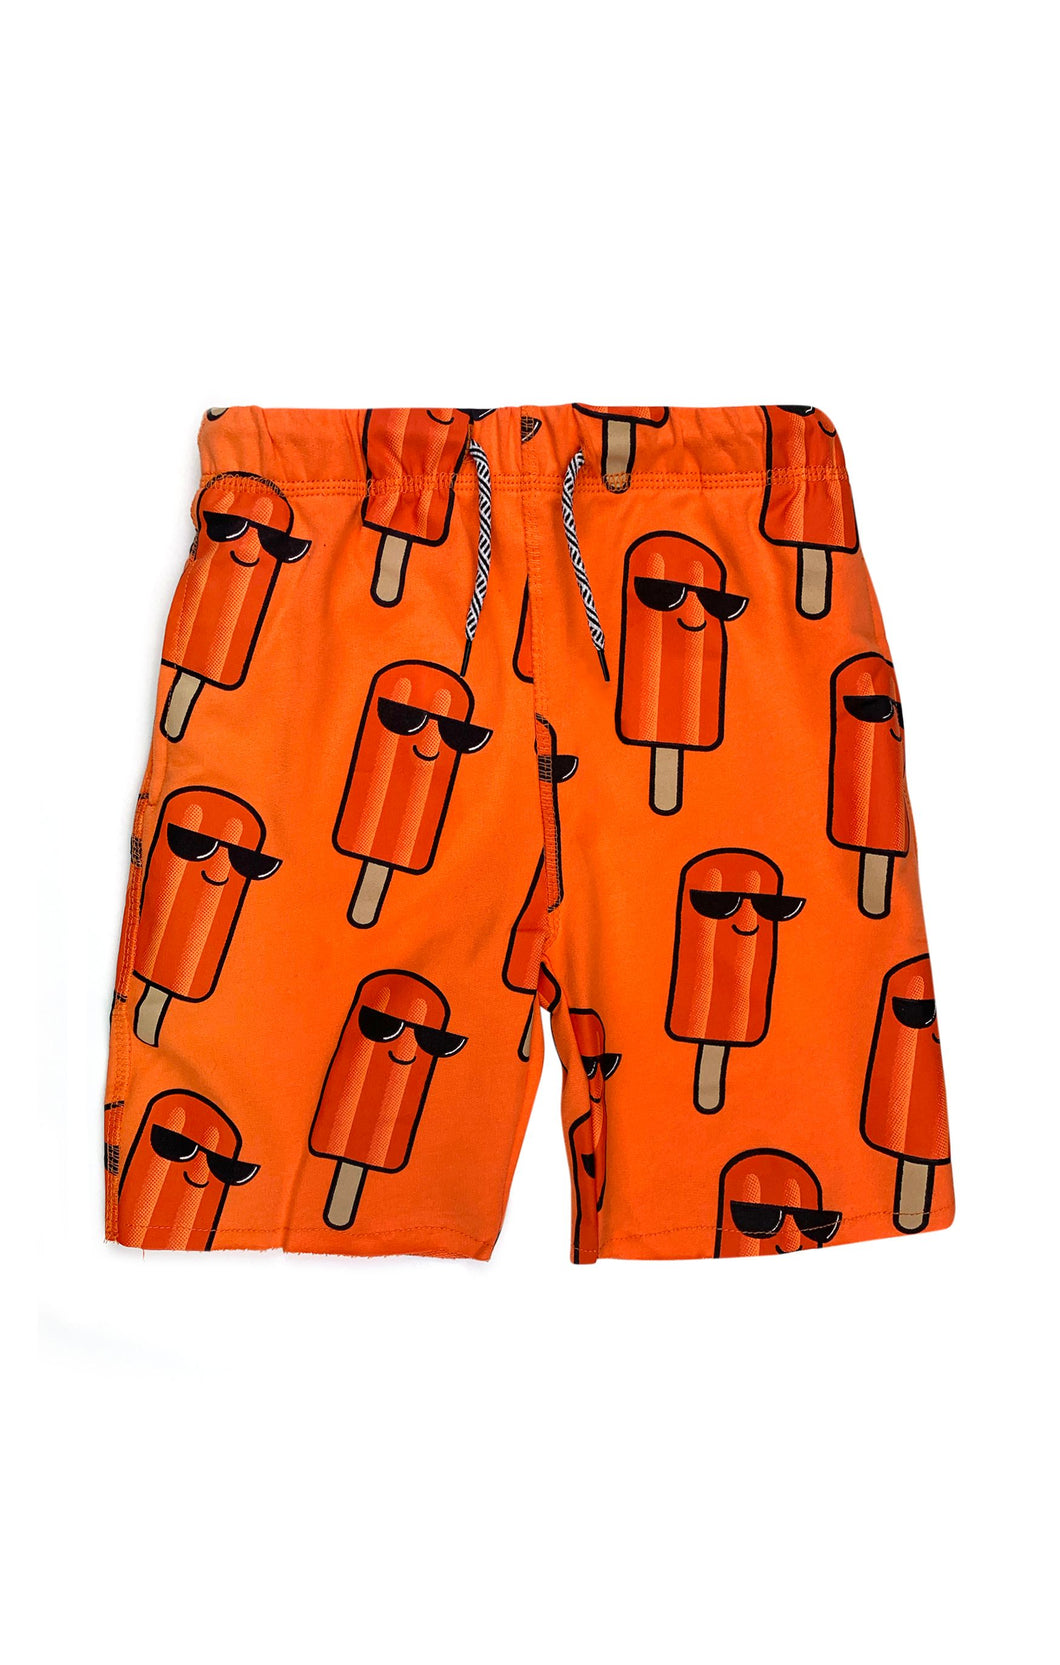 Camp Shorts - Orange Pops